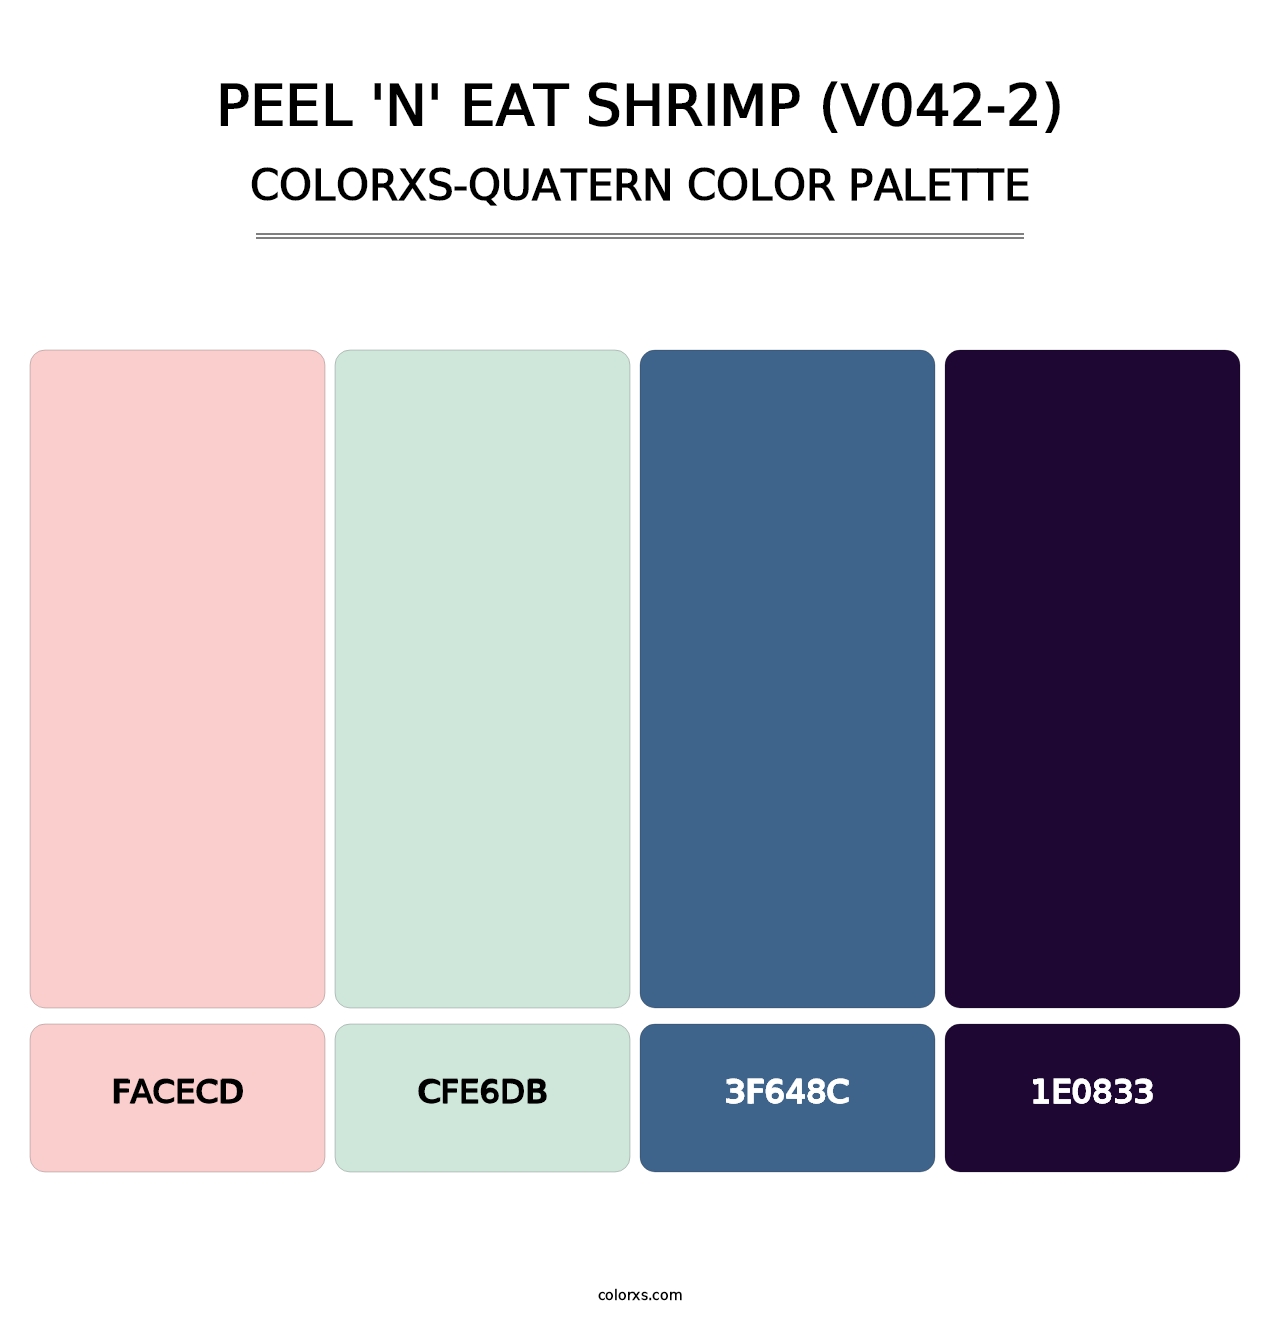 Peel 'n' Eat Shrimp (V042-2) - Colorxs Quatern Palette